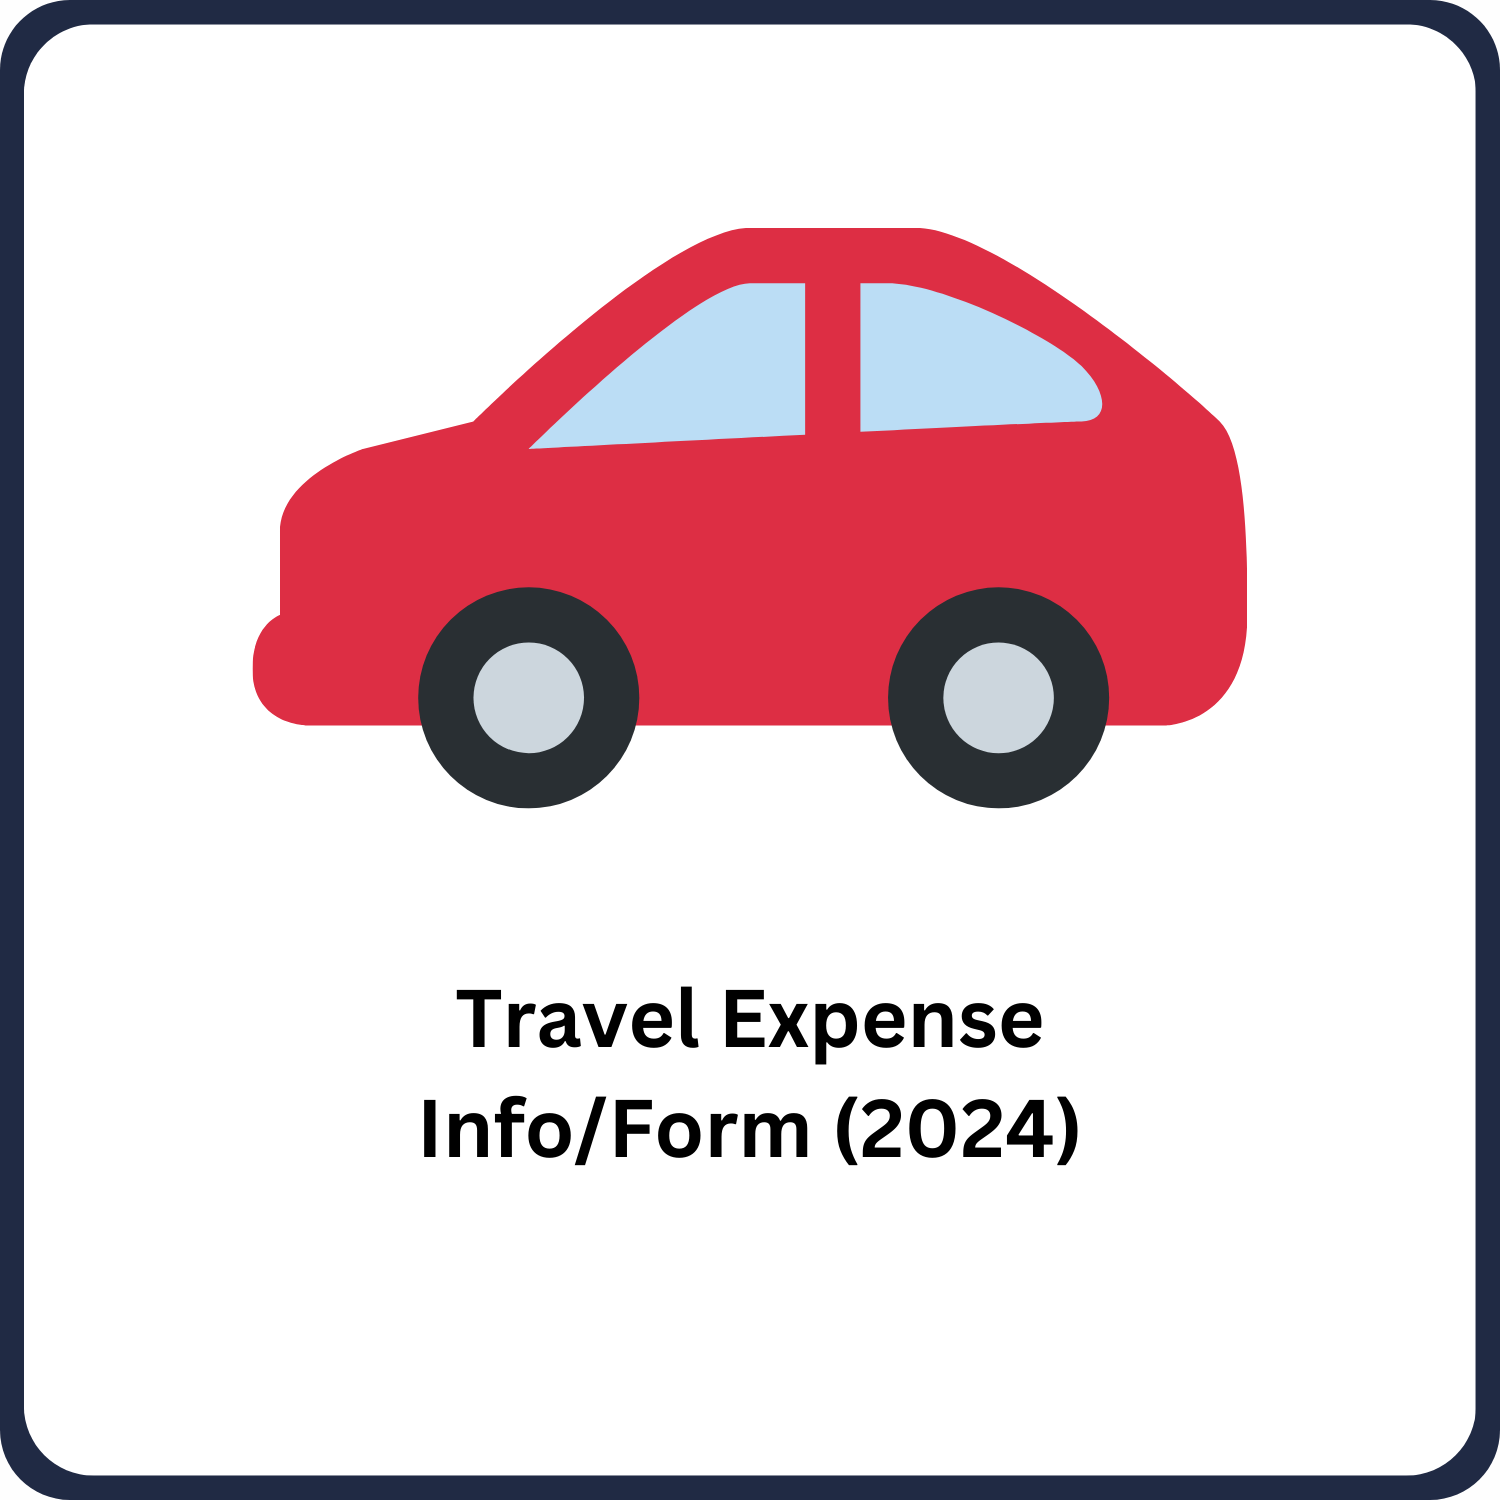 Travel Expense Form/Info